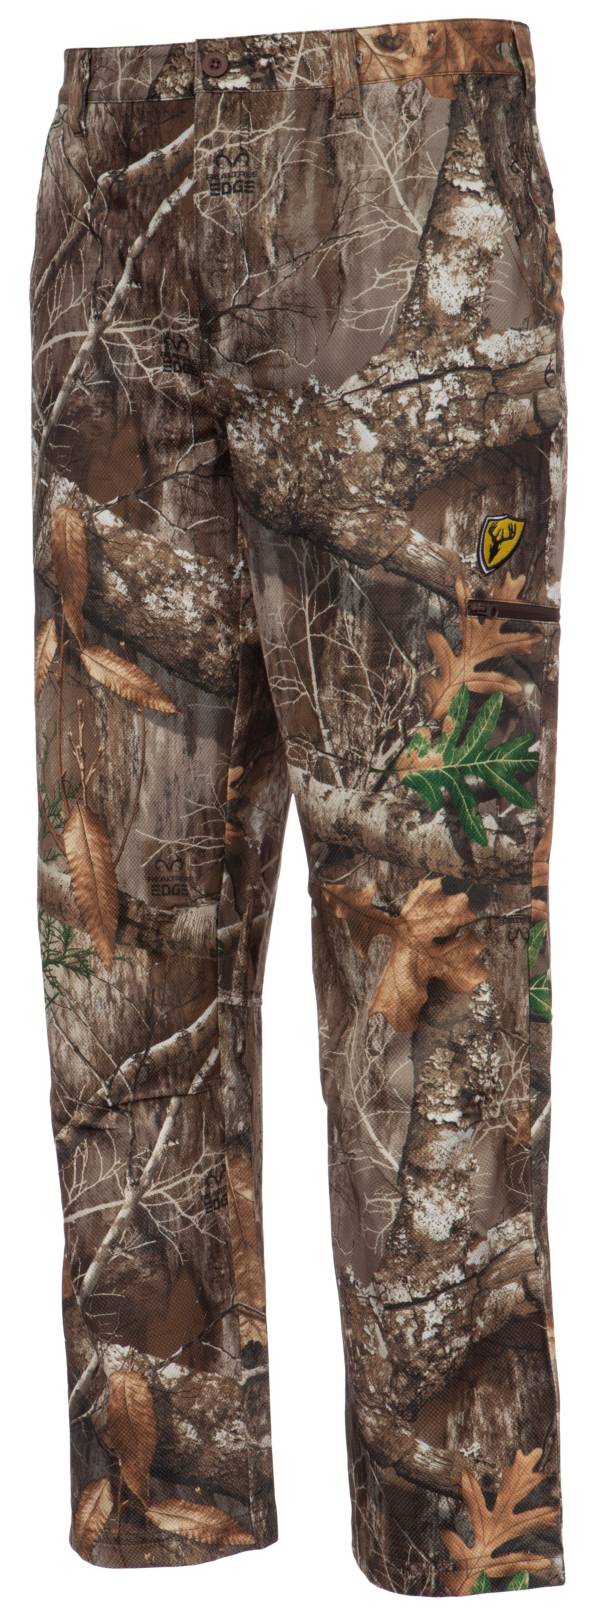 Blocker Outdoors Men's Shield Series Angatec Pants product image